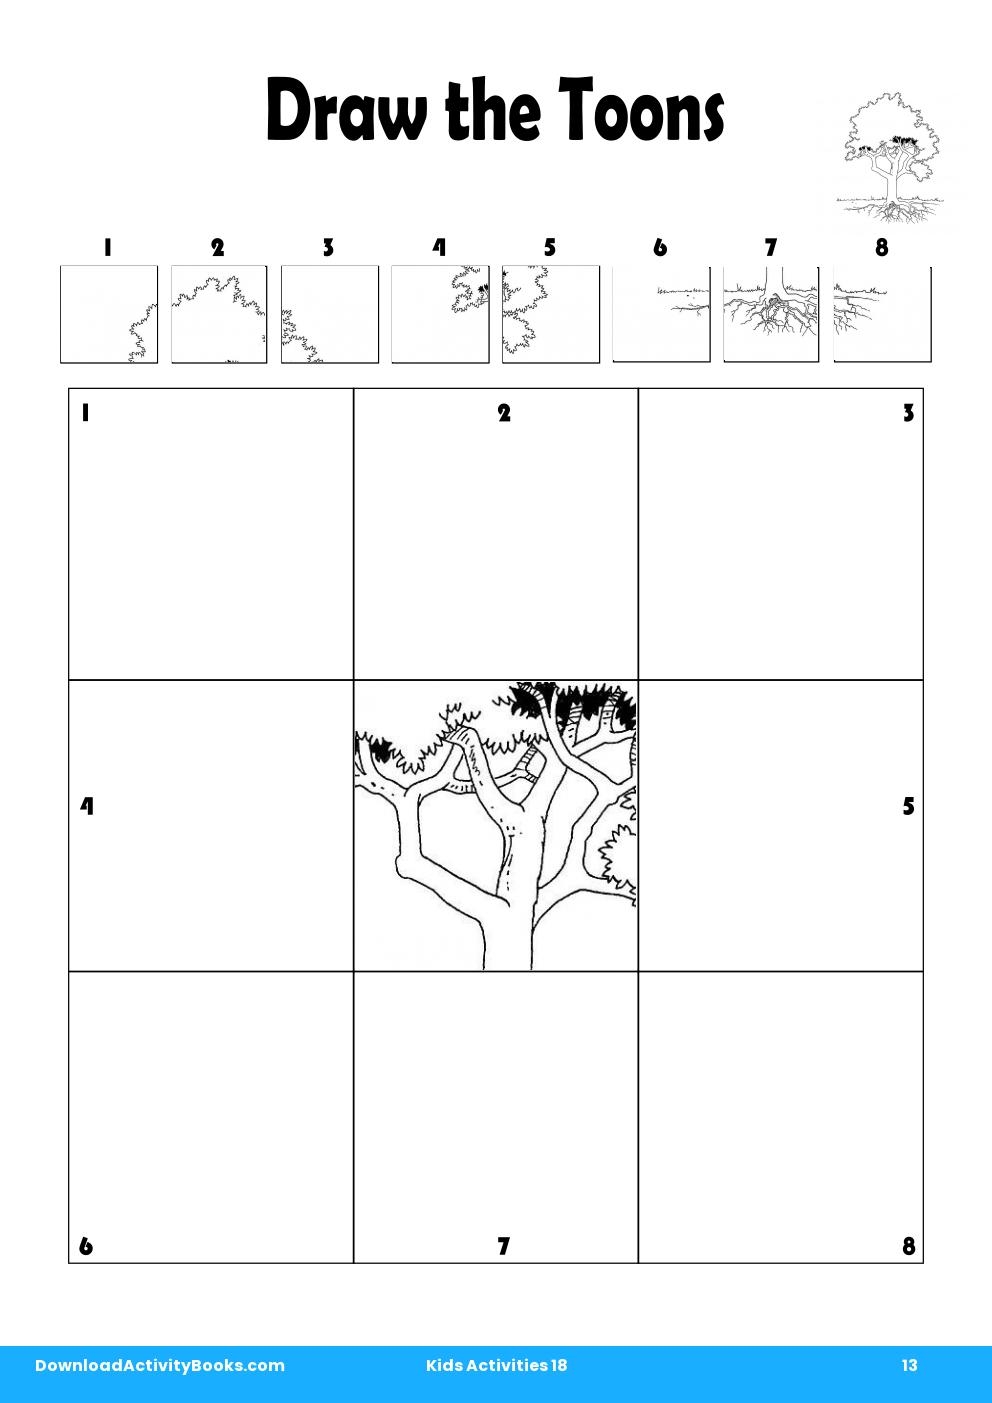 Draw The Toons in Kids Activities 18